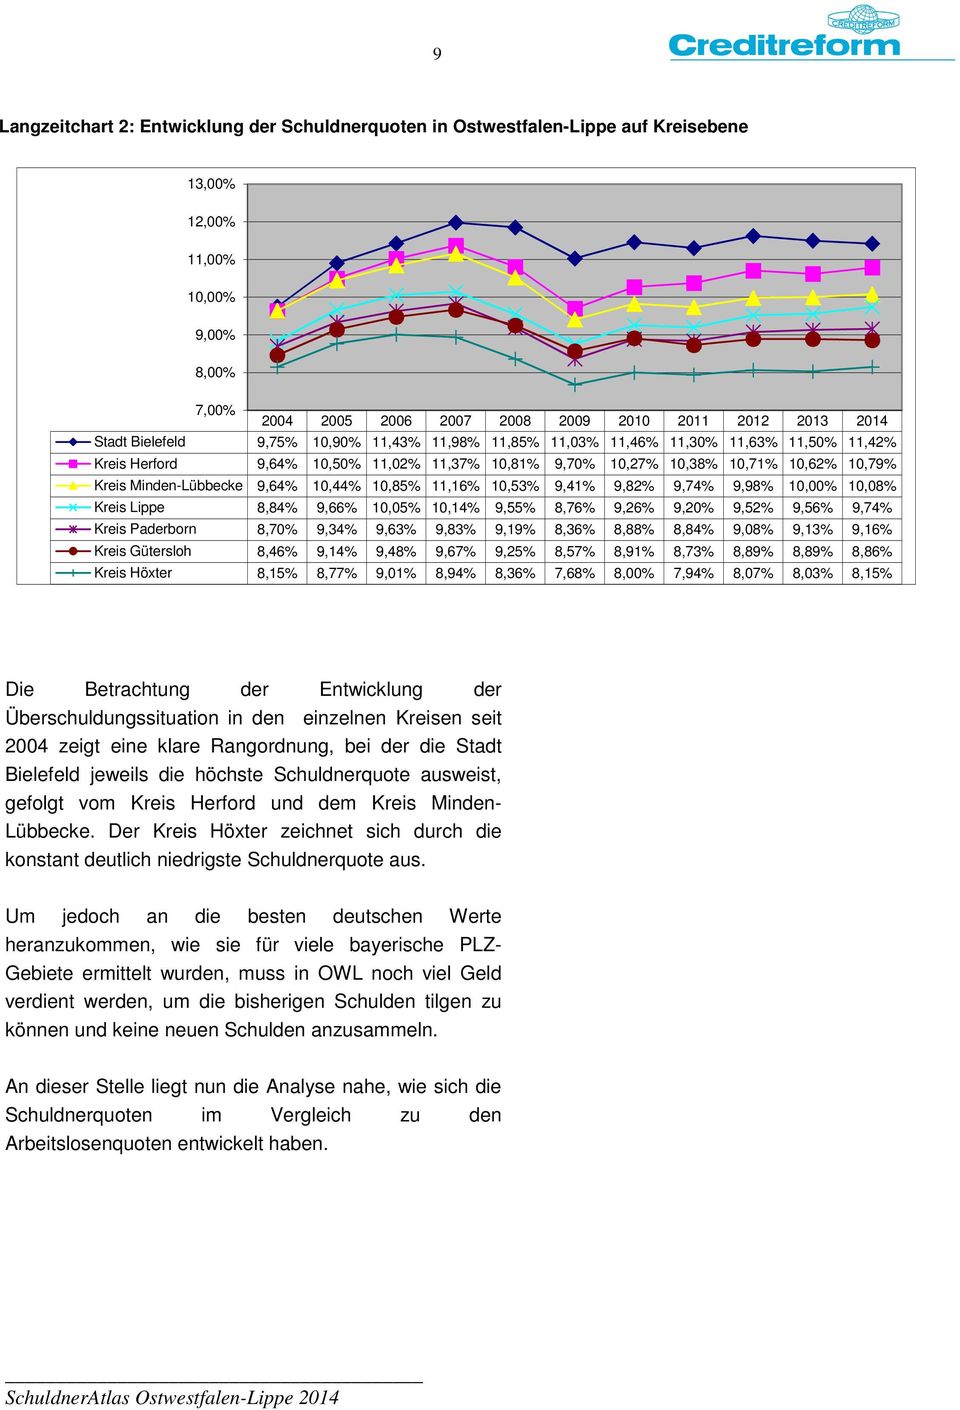 9,64% 10,44% 10,85% 11,16% 10,53% 9,41% 9,82% 9,74% 9,98% 10,00% 10,08% Kreis Lippe 8,84% 9,66% 10,05% 10,14% 9,55% 8,76% 9,26% 9,20% 9,52% 9,56% 9,74% Kreis Paderborn 8,70% 9,34% 9,63% 9,83% 9,19%